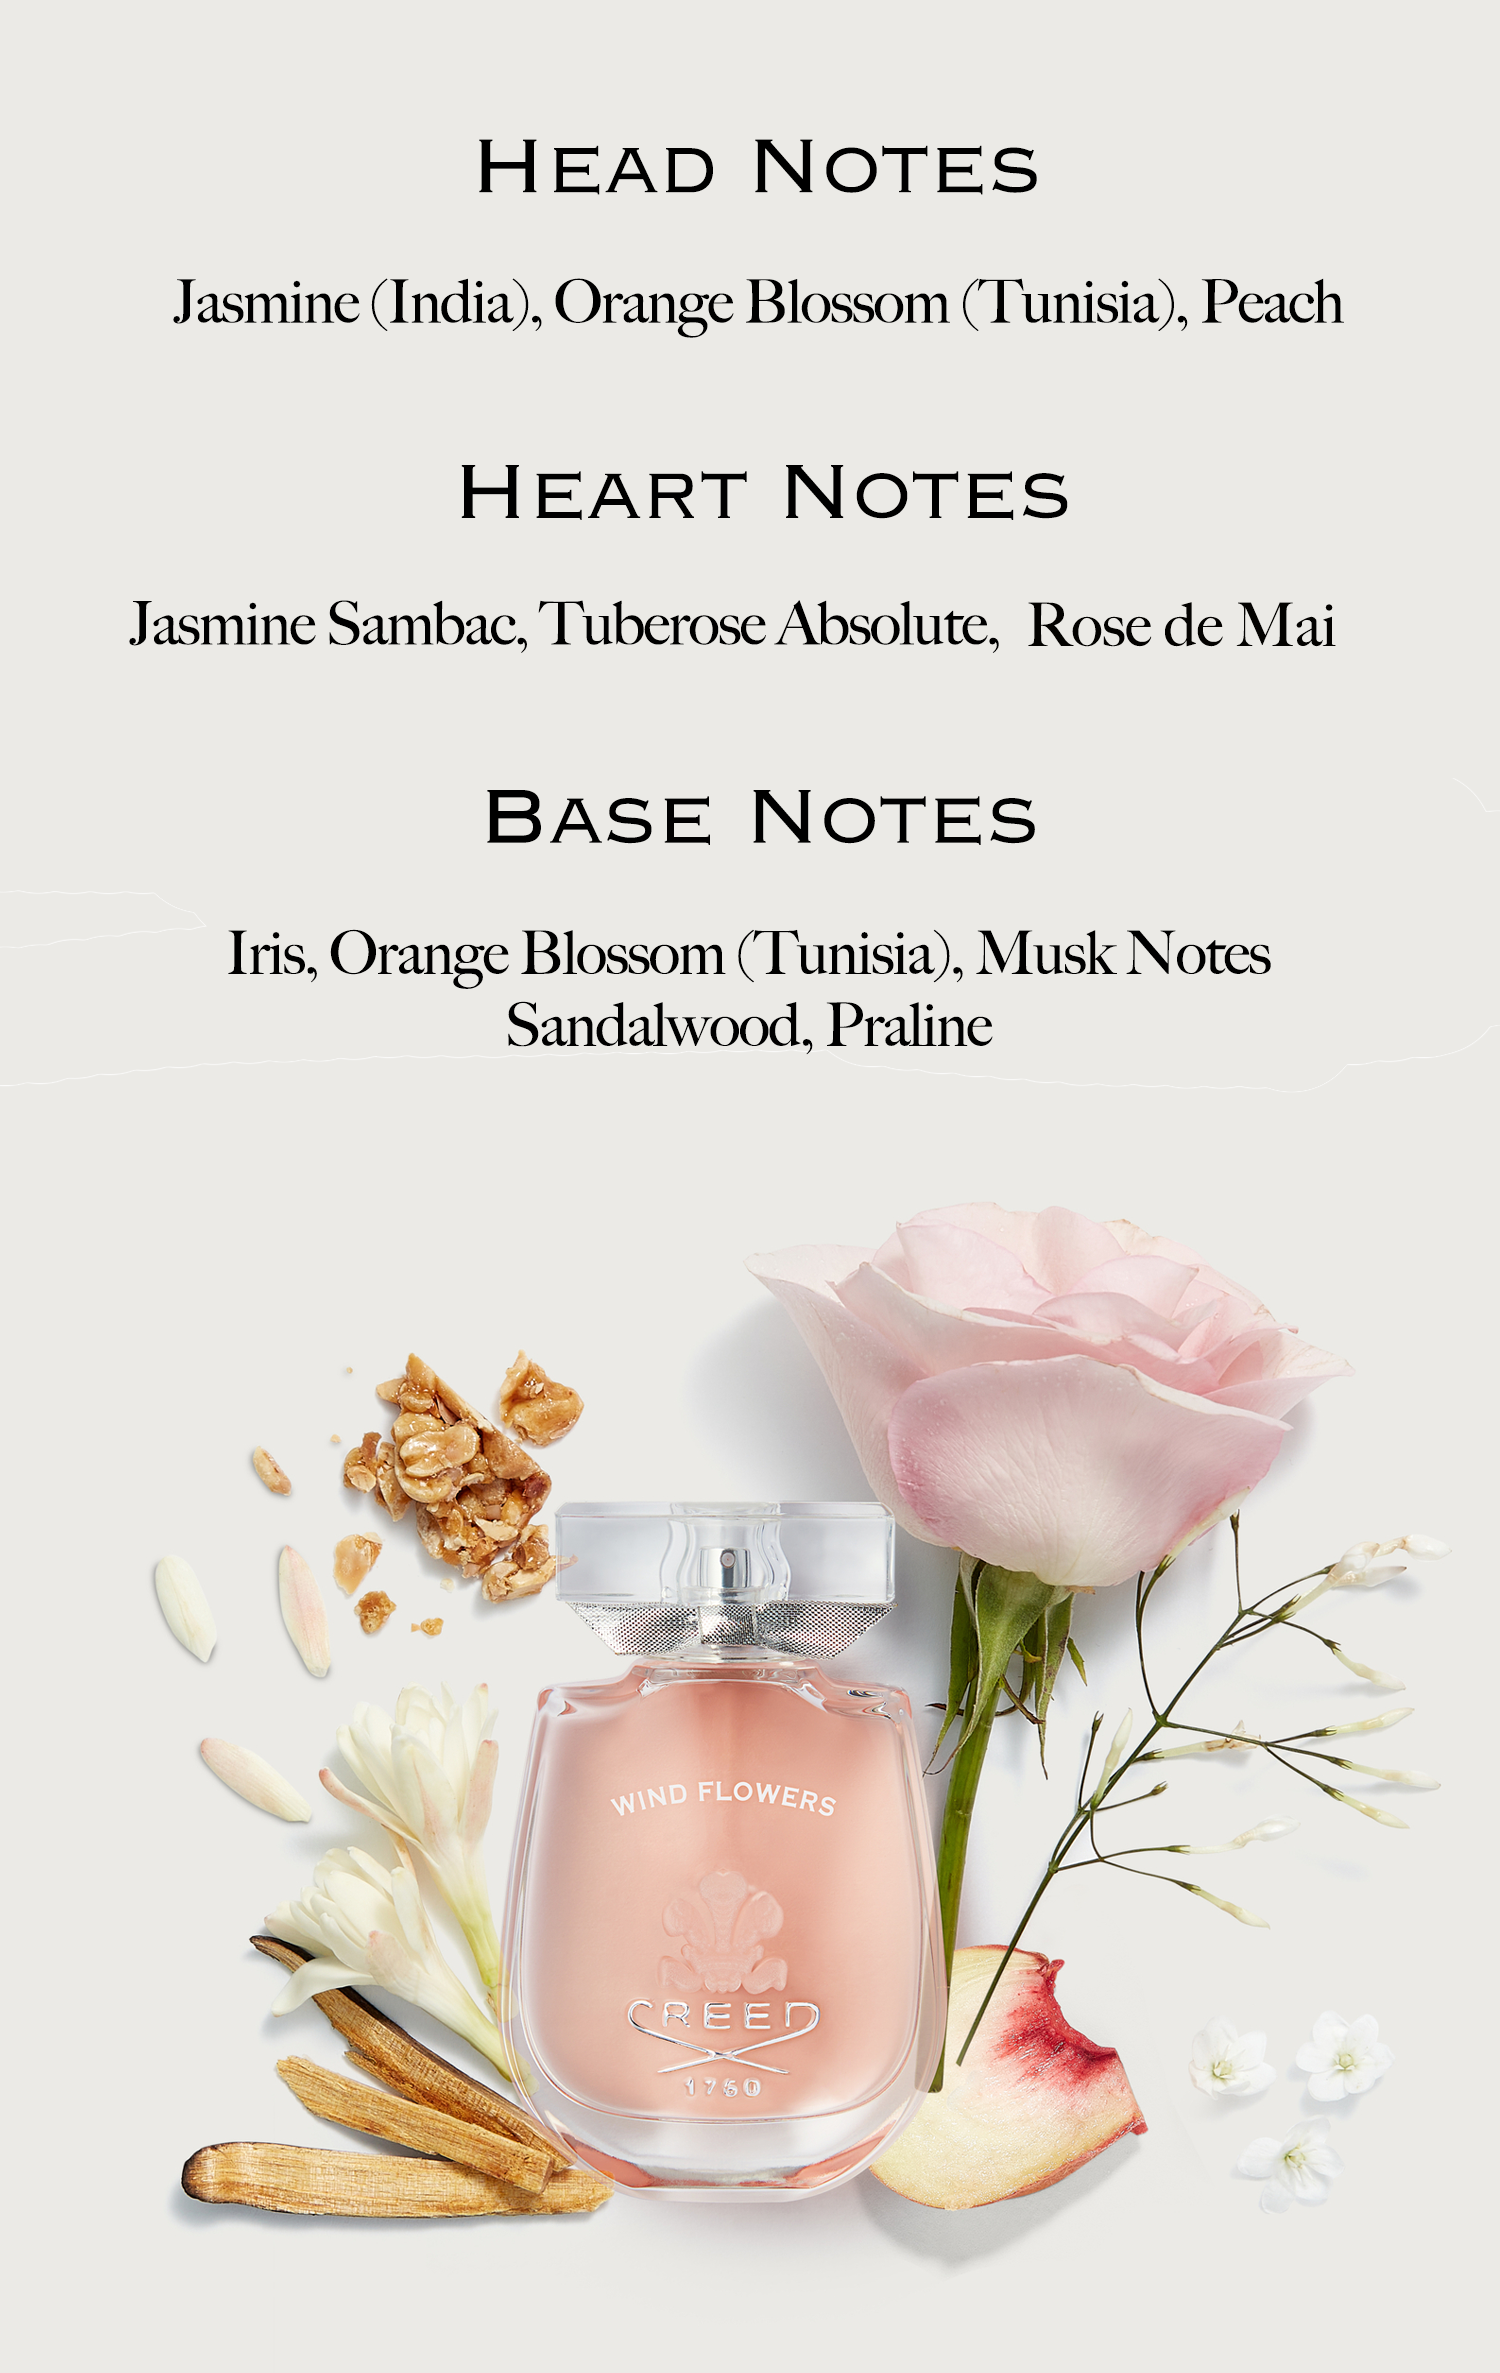 Head notes. Jasmine (India), Orange Blossom (Tunisia), Peach. Heart Notes. Jasmine Sambac, Tuberose Absolute, Rose de Mai. Base Notes. Irish, Orange Blossom (Tunisia), Musk notes Sandalwood, Praline.